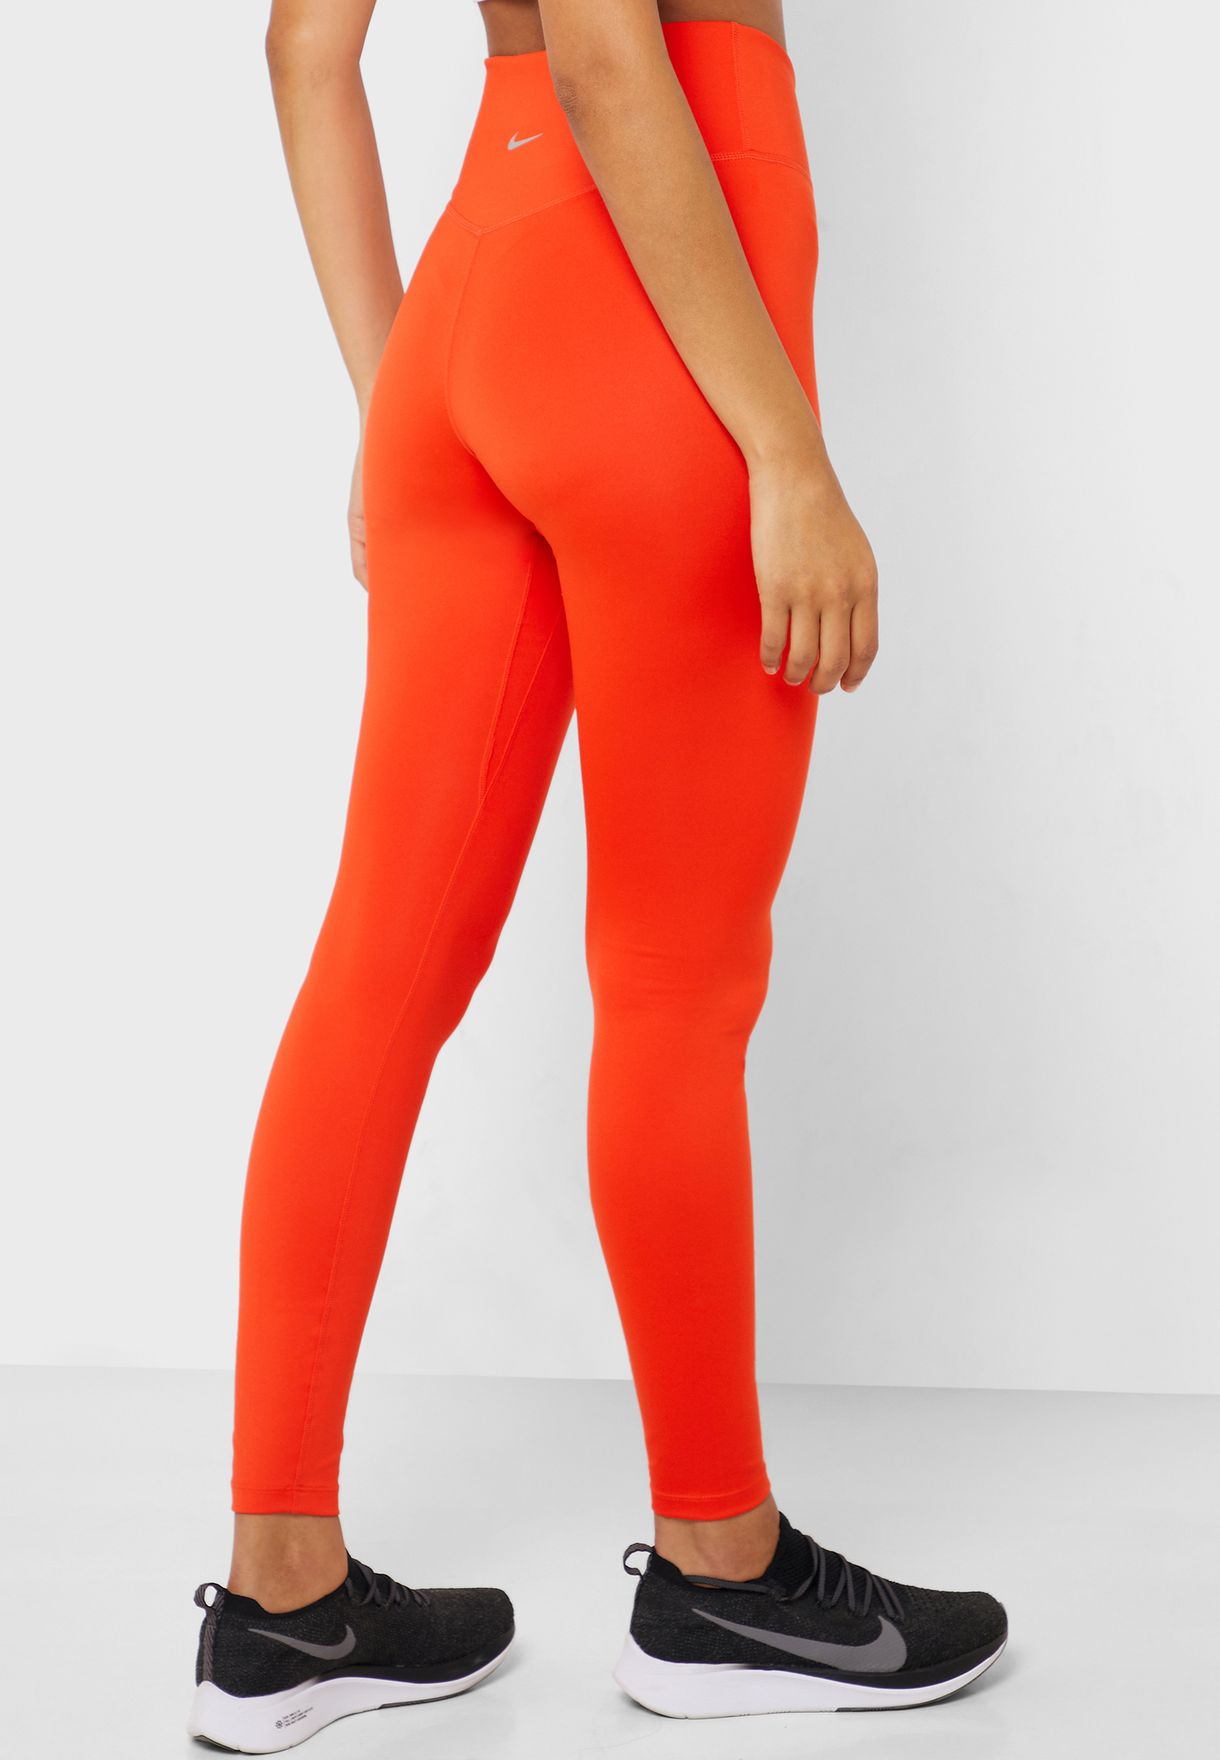 orange nike tights